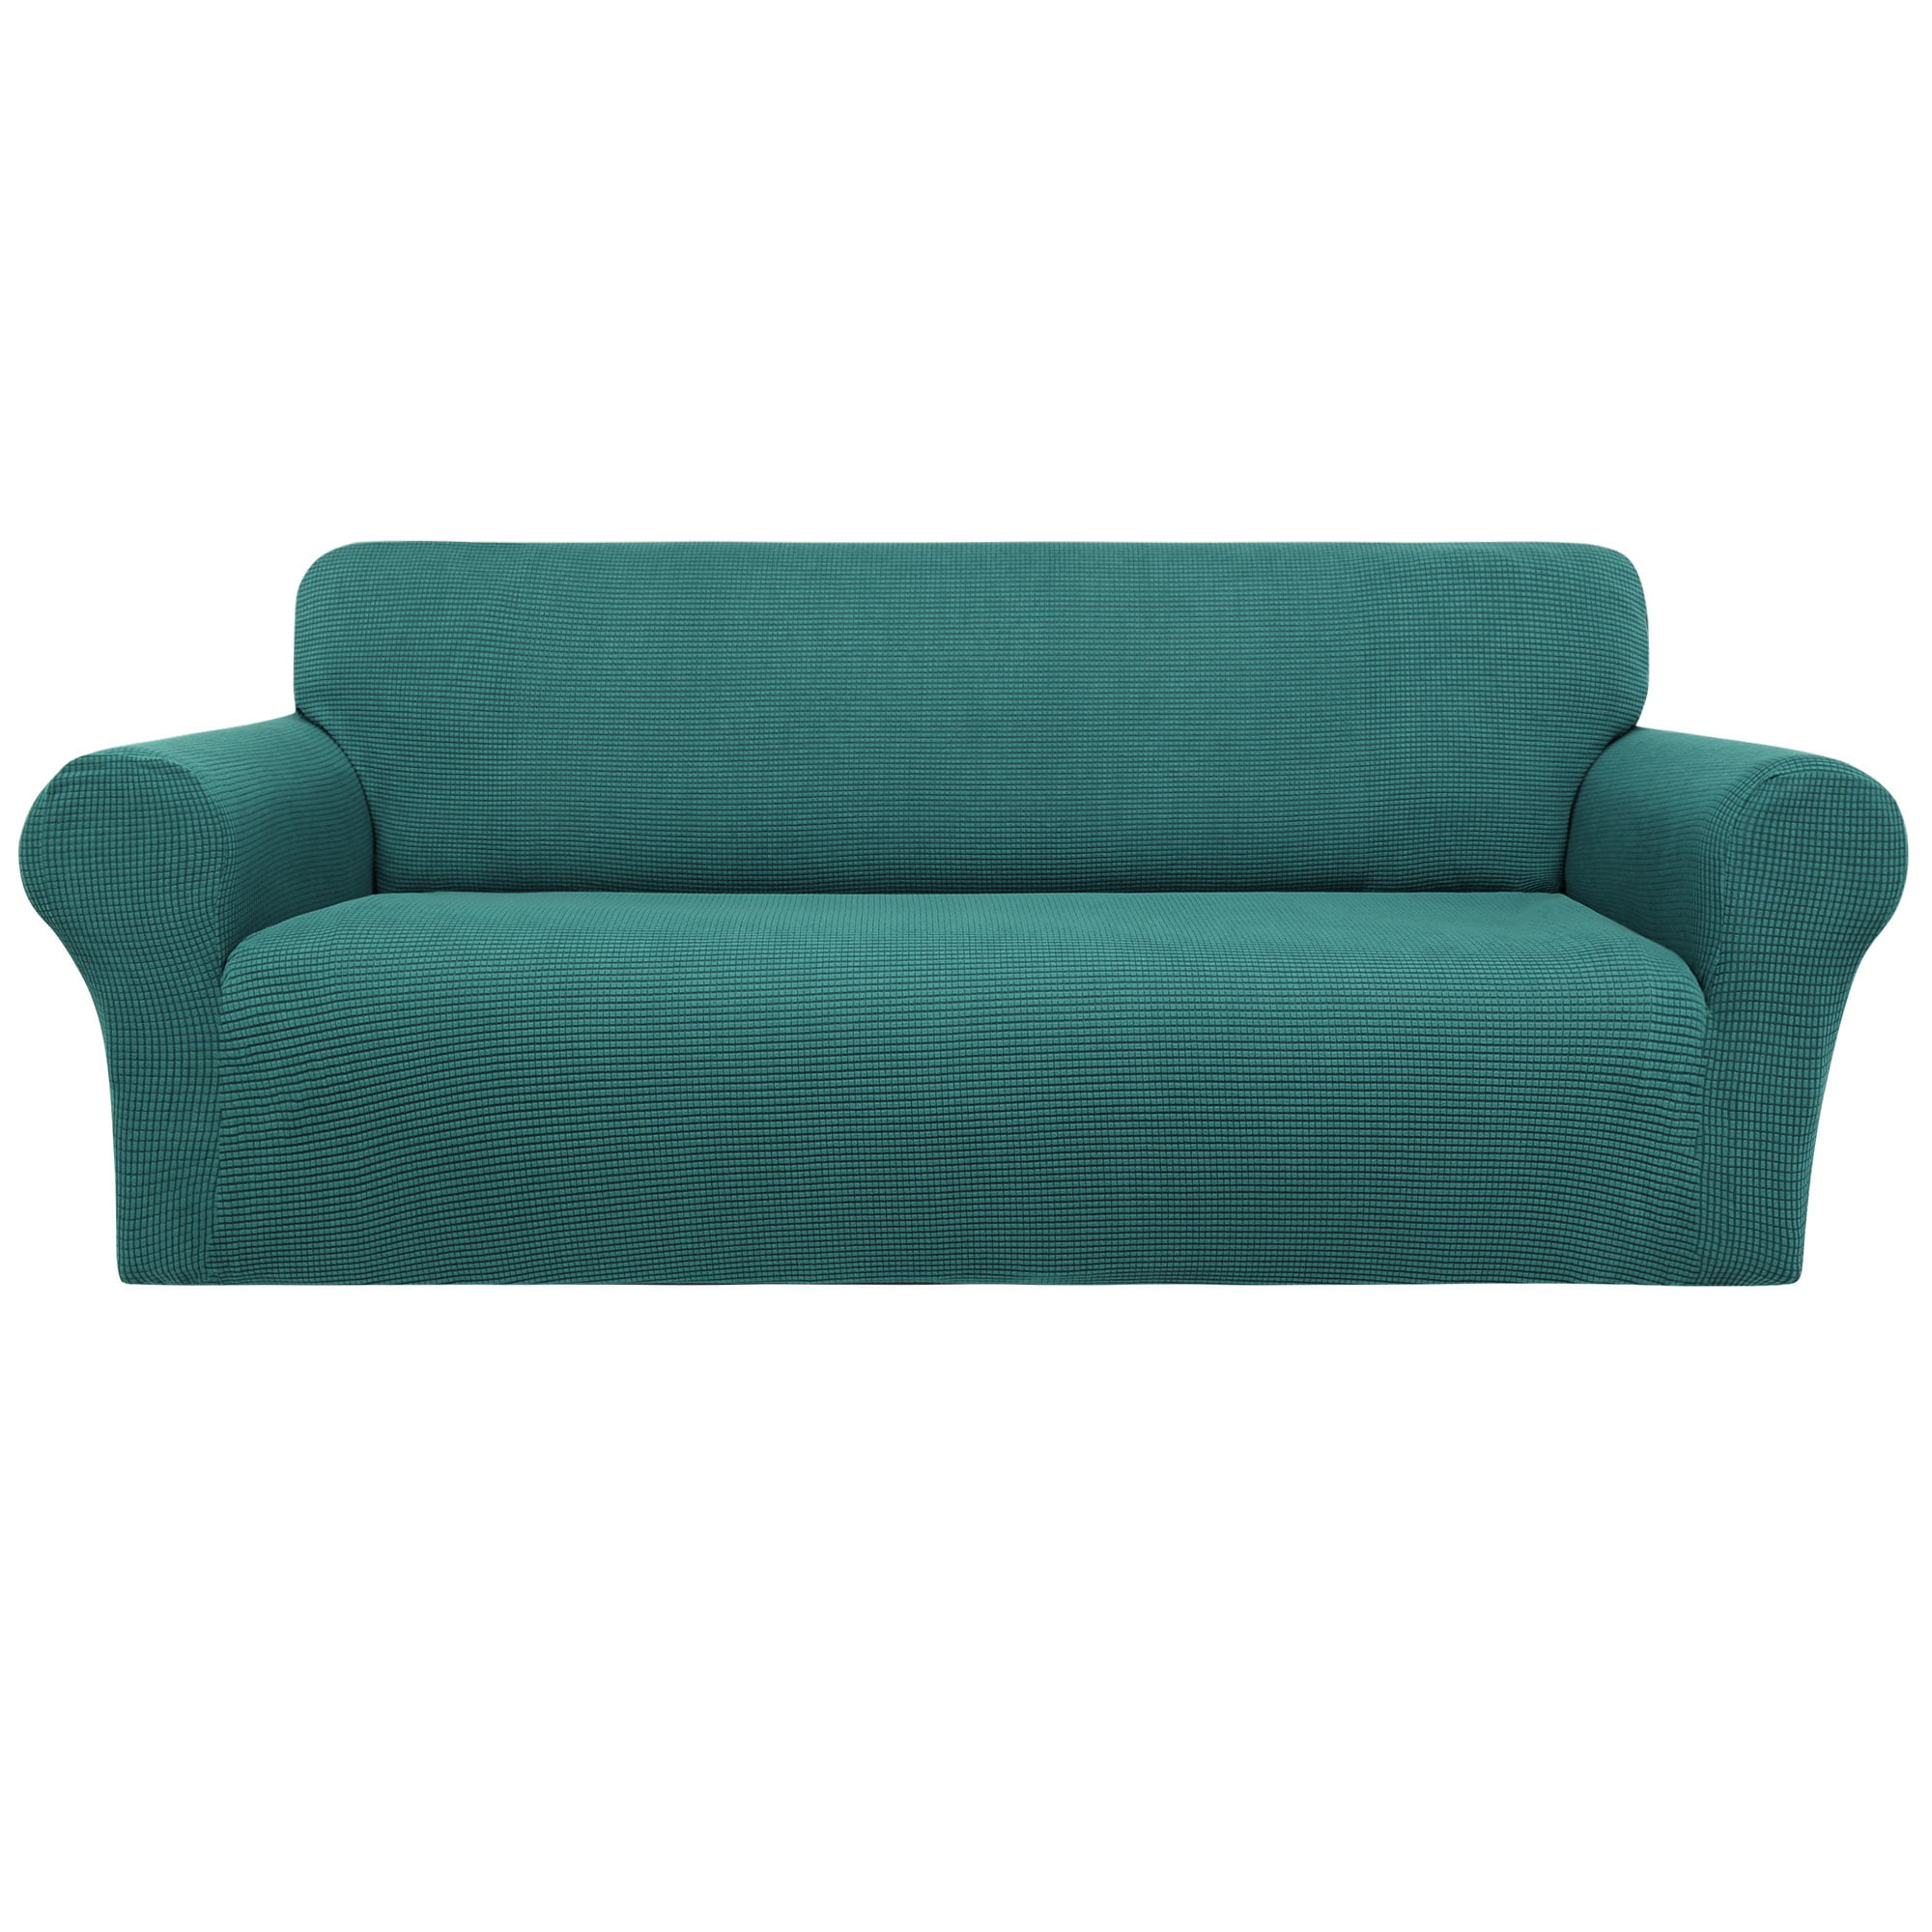 Easy-Going Stretch Sofa Slipcover Kids Recliner,Peacock Blue Spandex Jacquard 